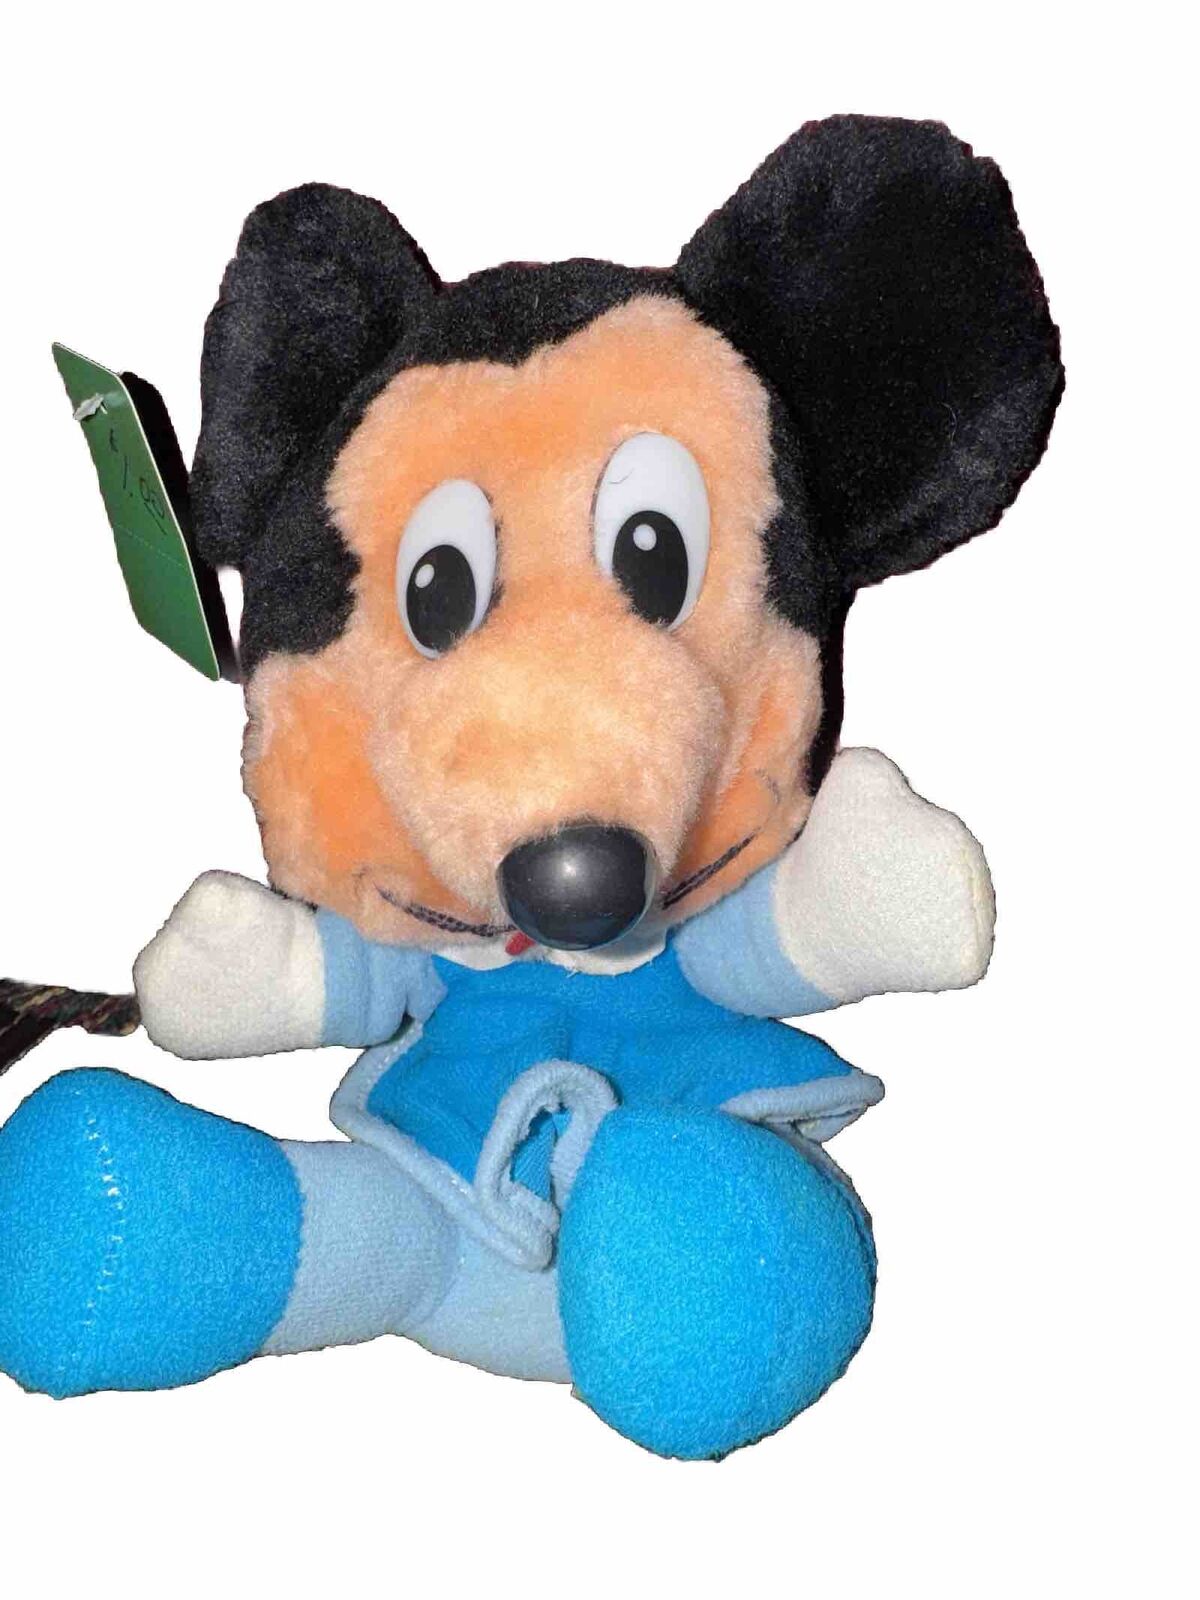 Vintage Disney Mickey\'s Acme Plush Toy Doll Minnie Mouse